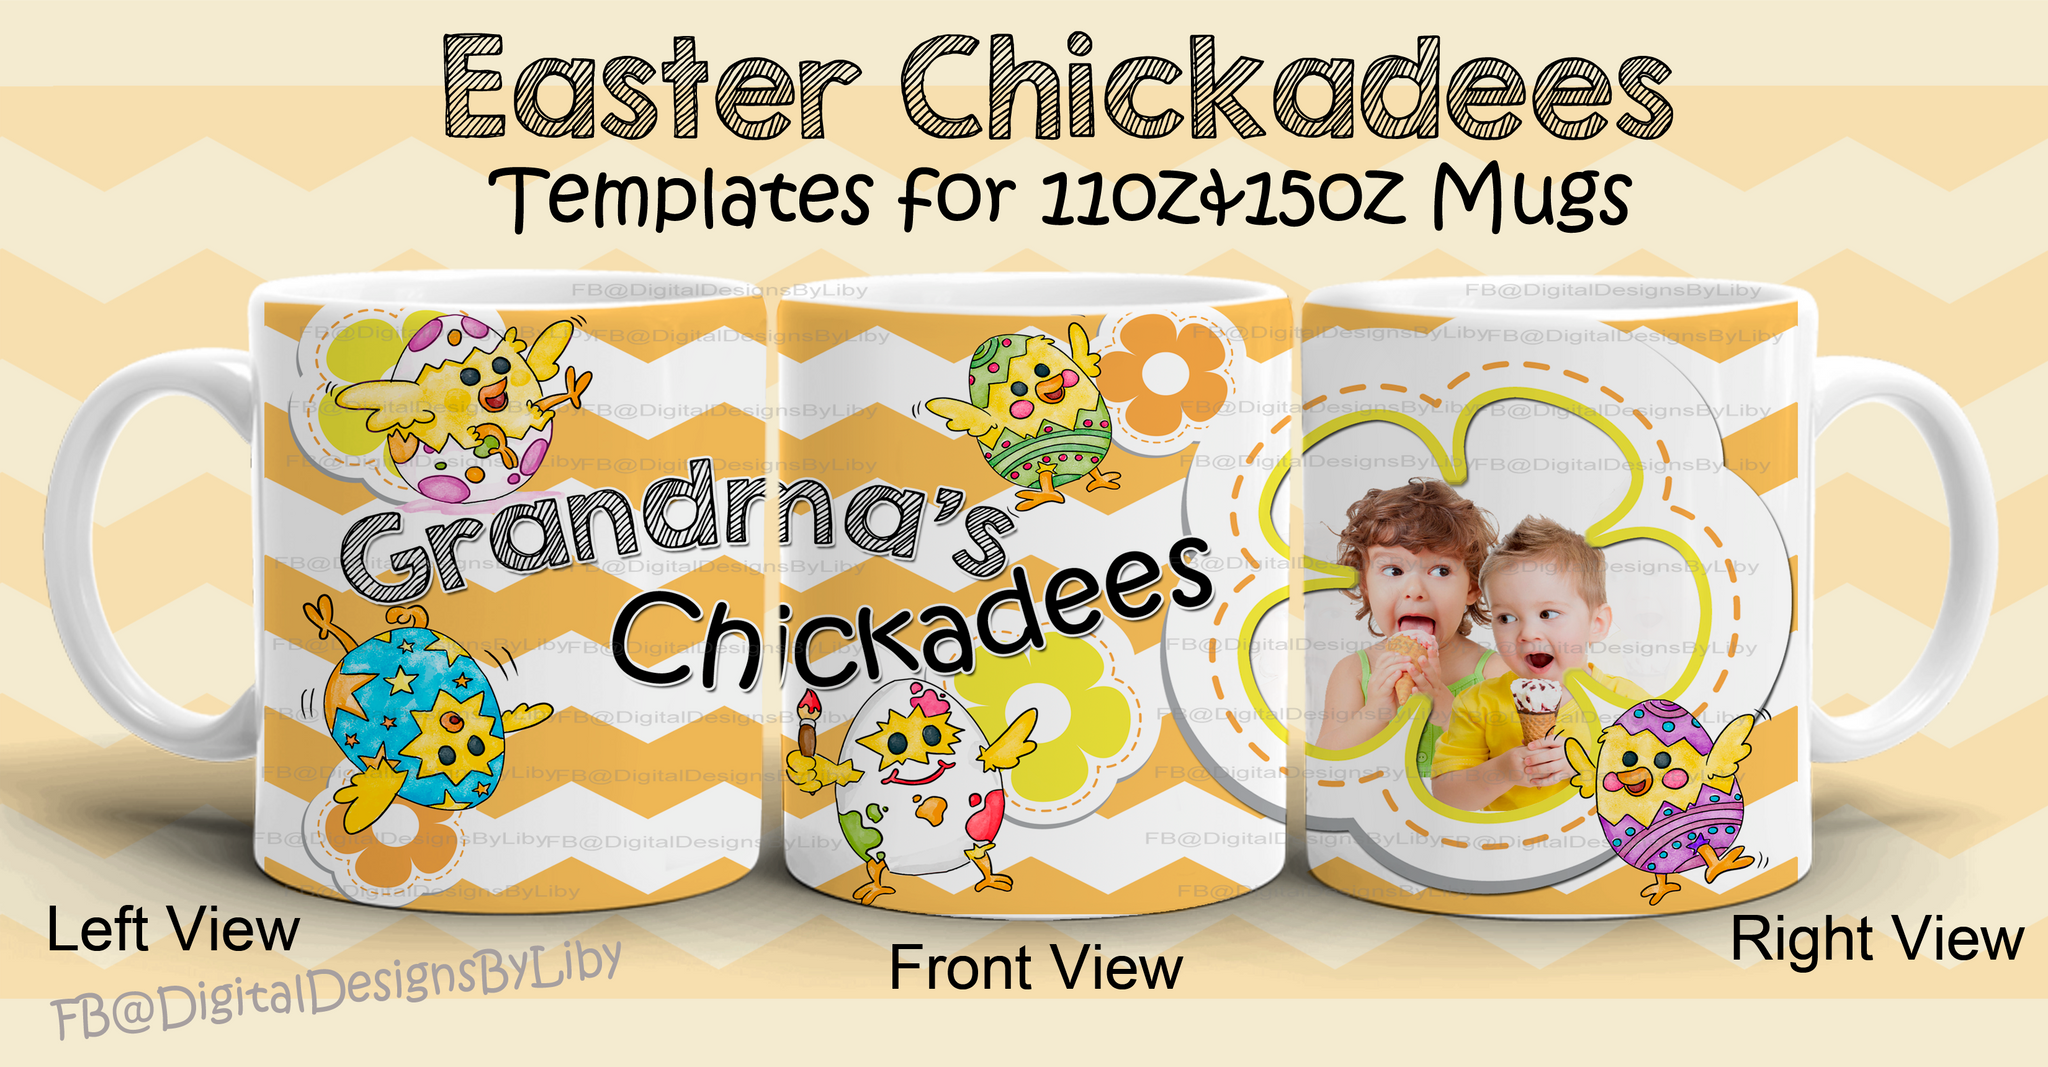 Easter Chickadees Mug Template